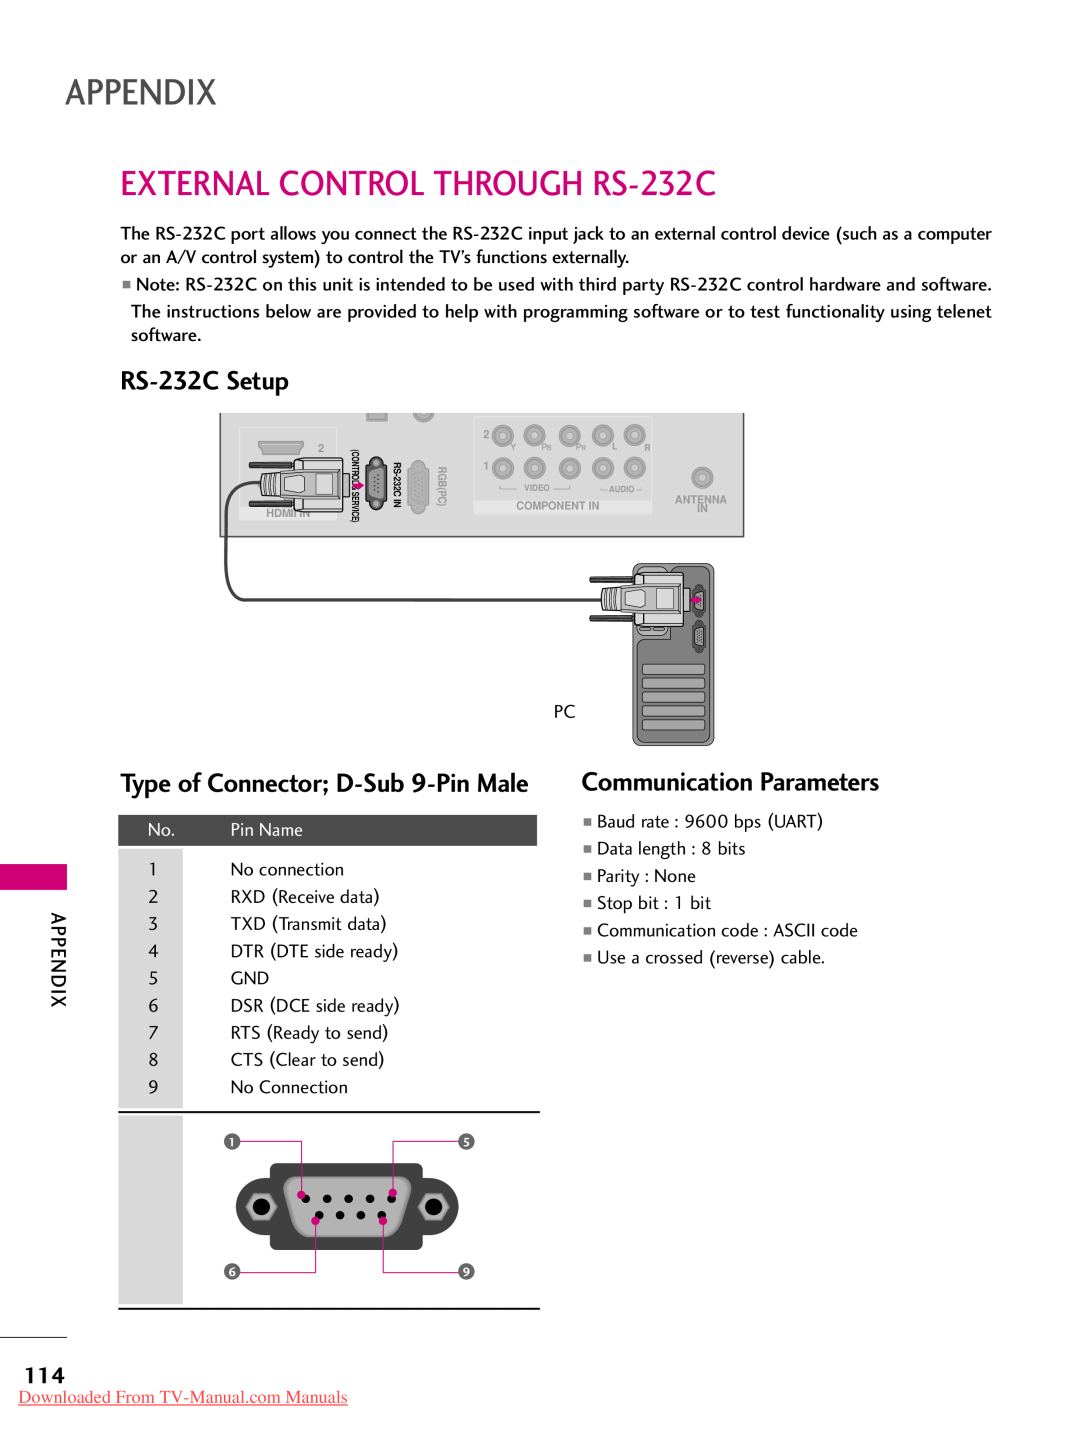 LG Electronics 50PK550 EXTERNAL CONTROL THROUGH RS-232C, RS-232C Setup, Communication Parameters, Pin Name, Appendix 